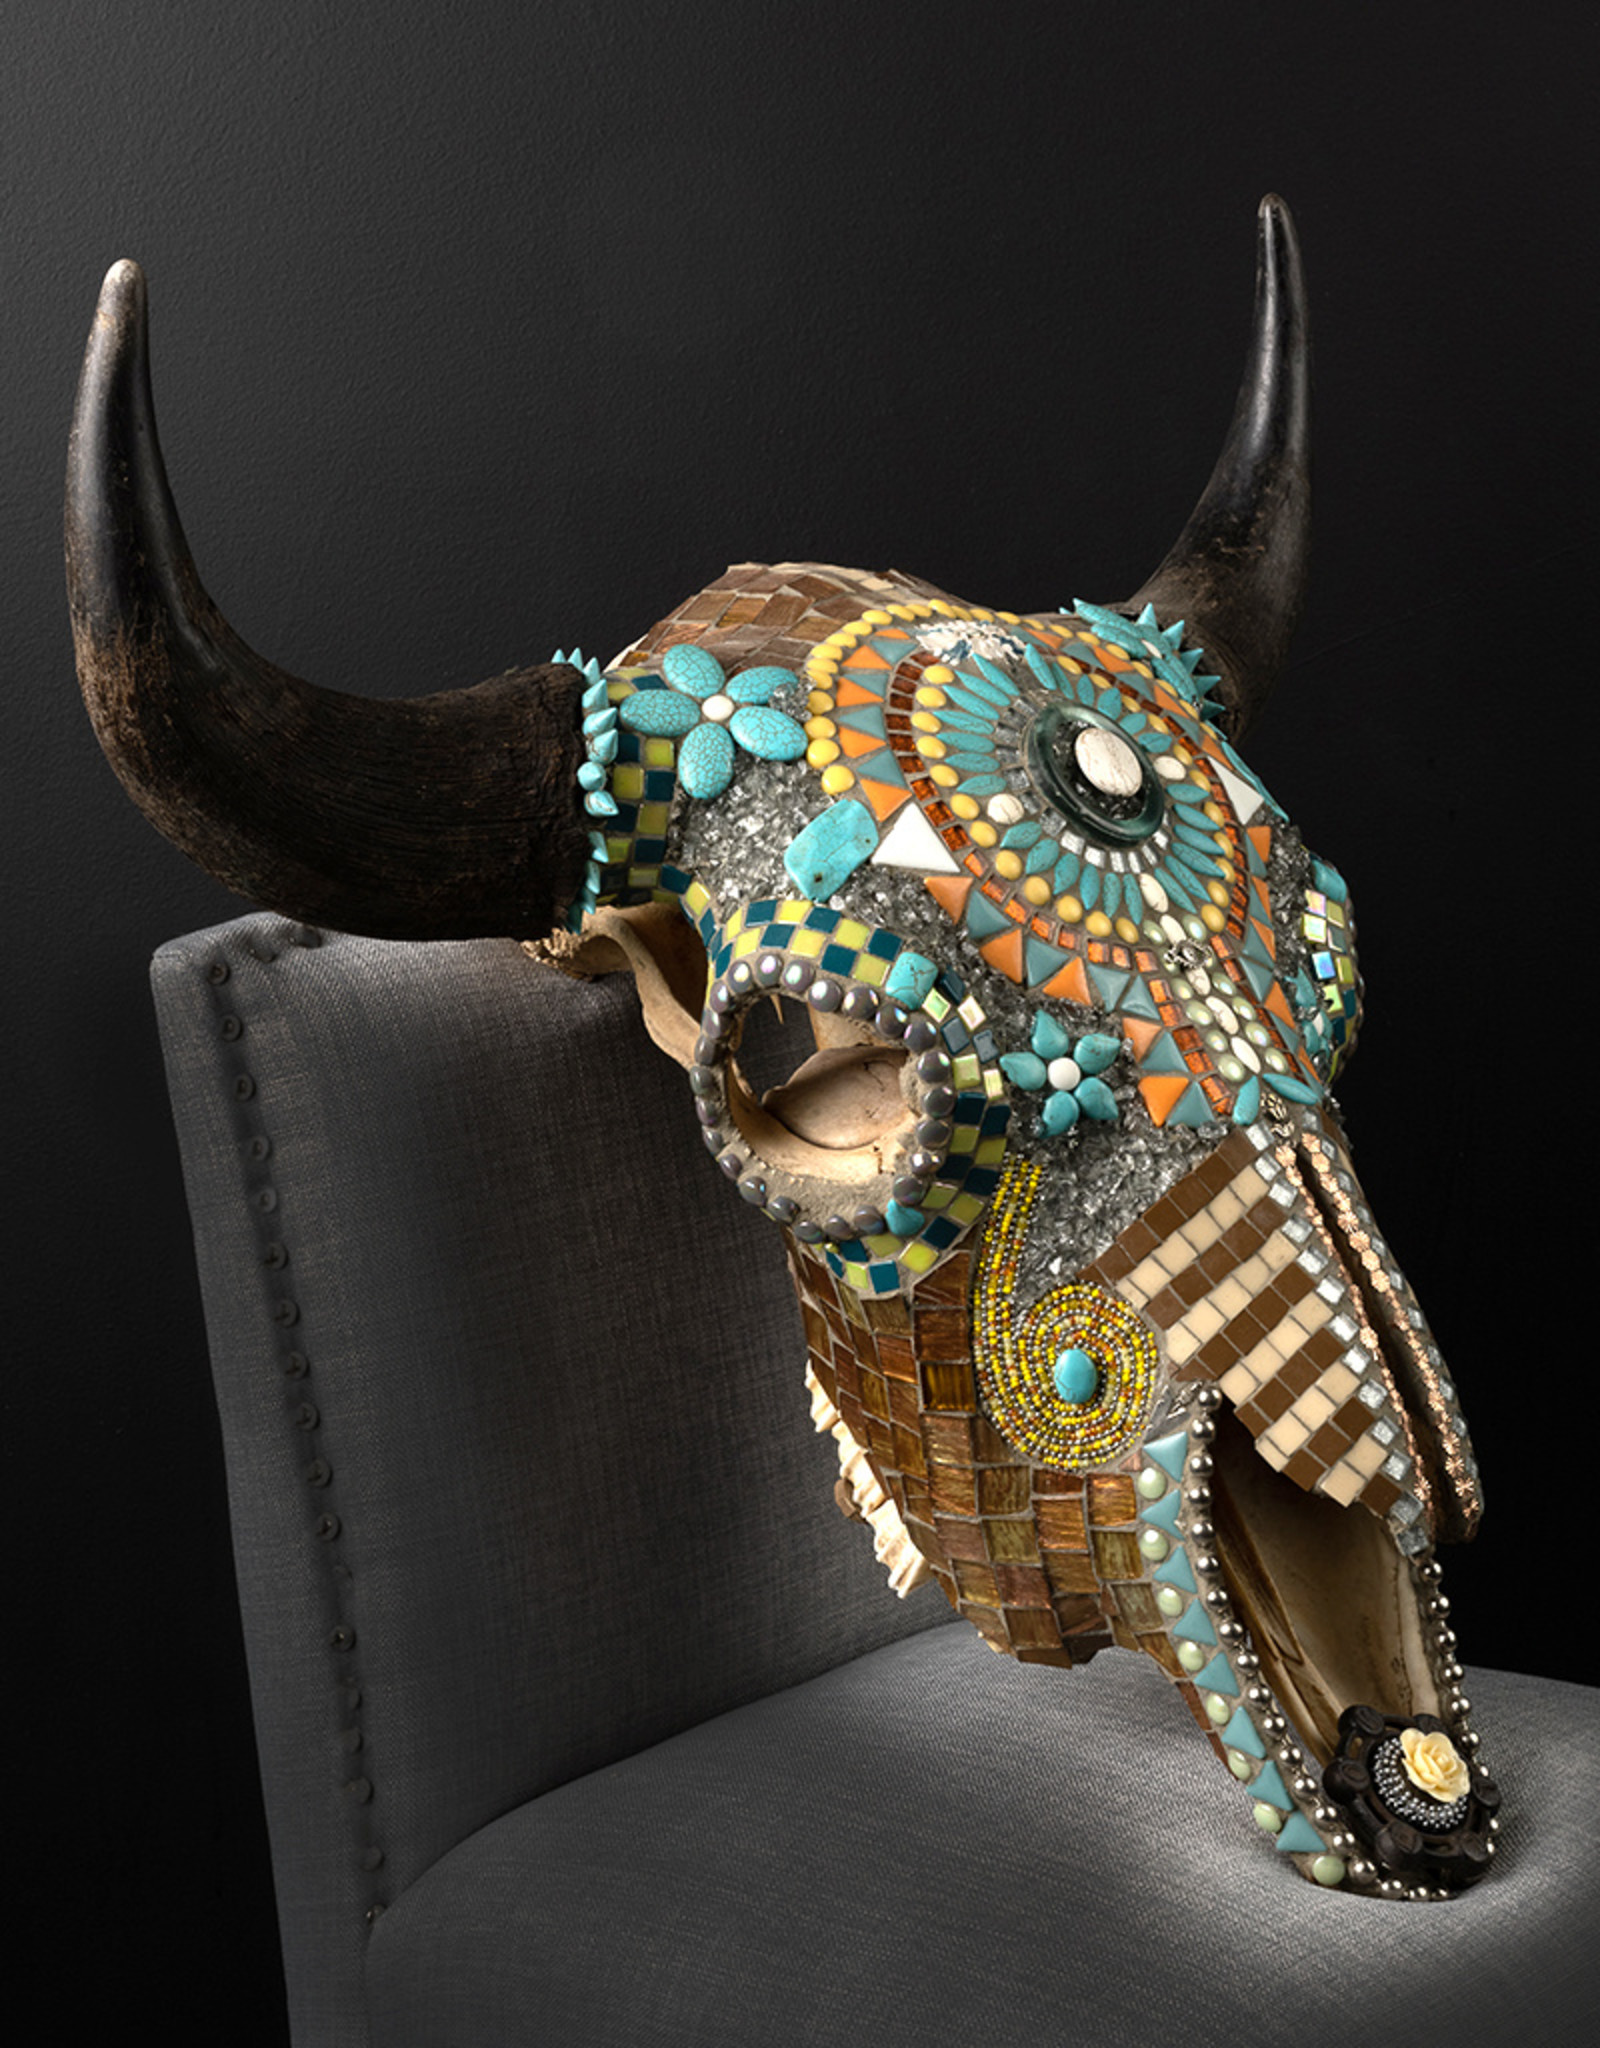 Kelly Nygard The Plumber - Decorated Buffalo Skull - Kelly Nygard